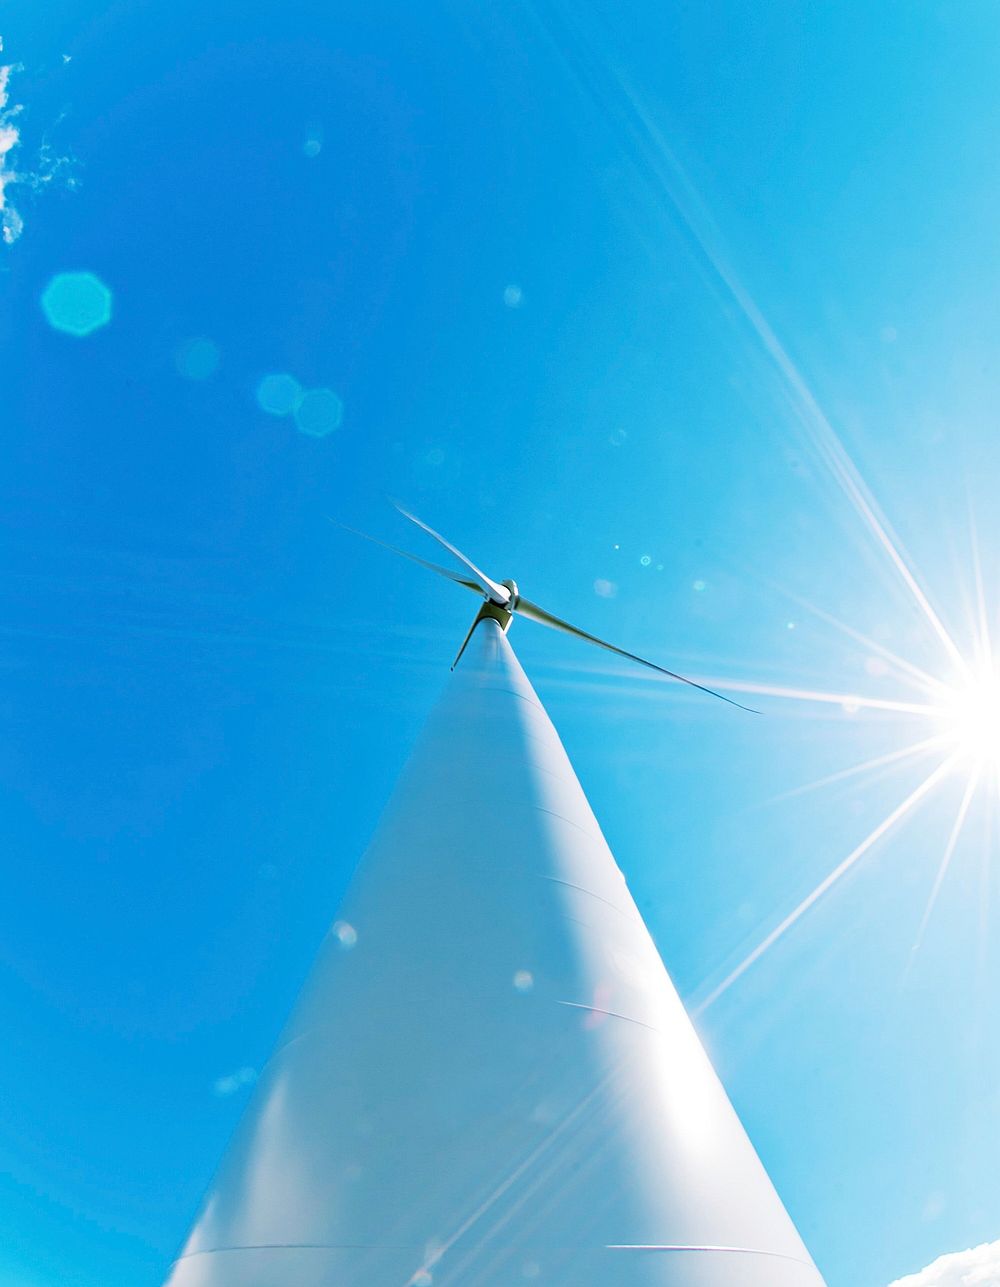 Free wind turbine image, public domain renewable energy CC0 photo.